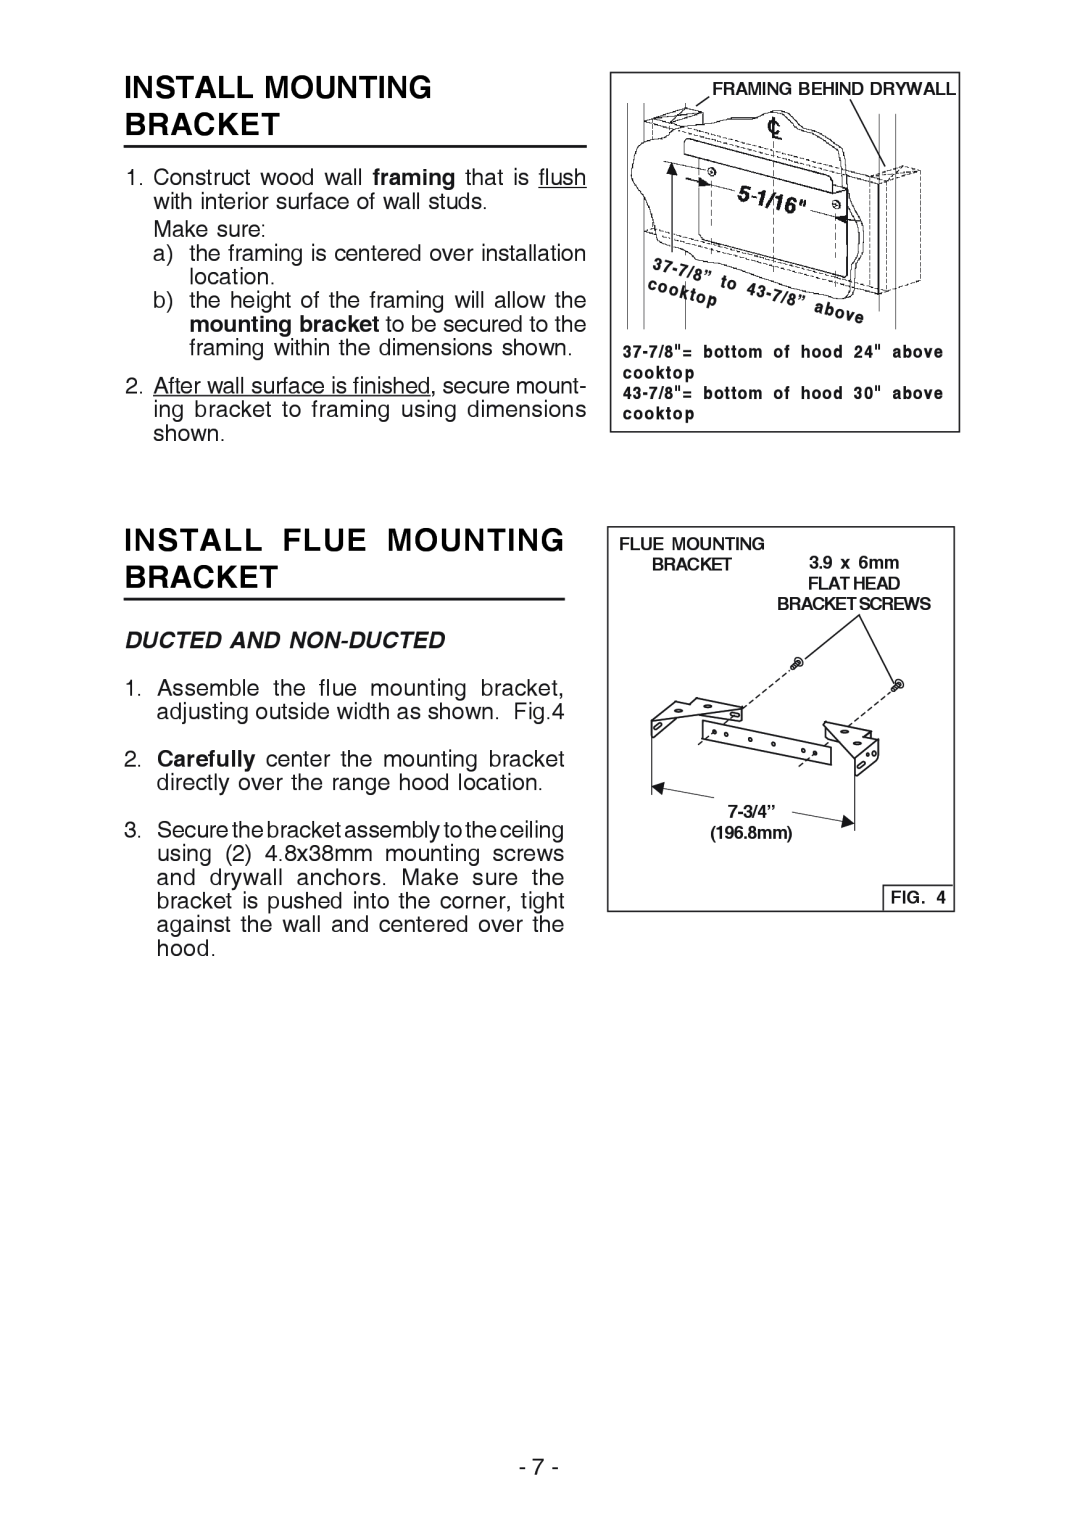 Best K3139 manual Install Mounting Bracket, Install Flue Mounting Bracket, Ducted And Non-Ducted 